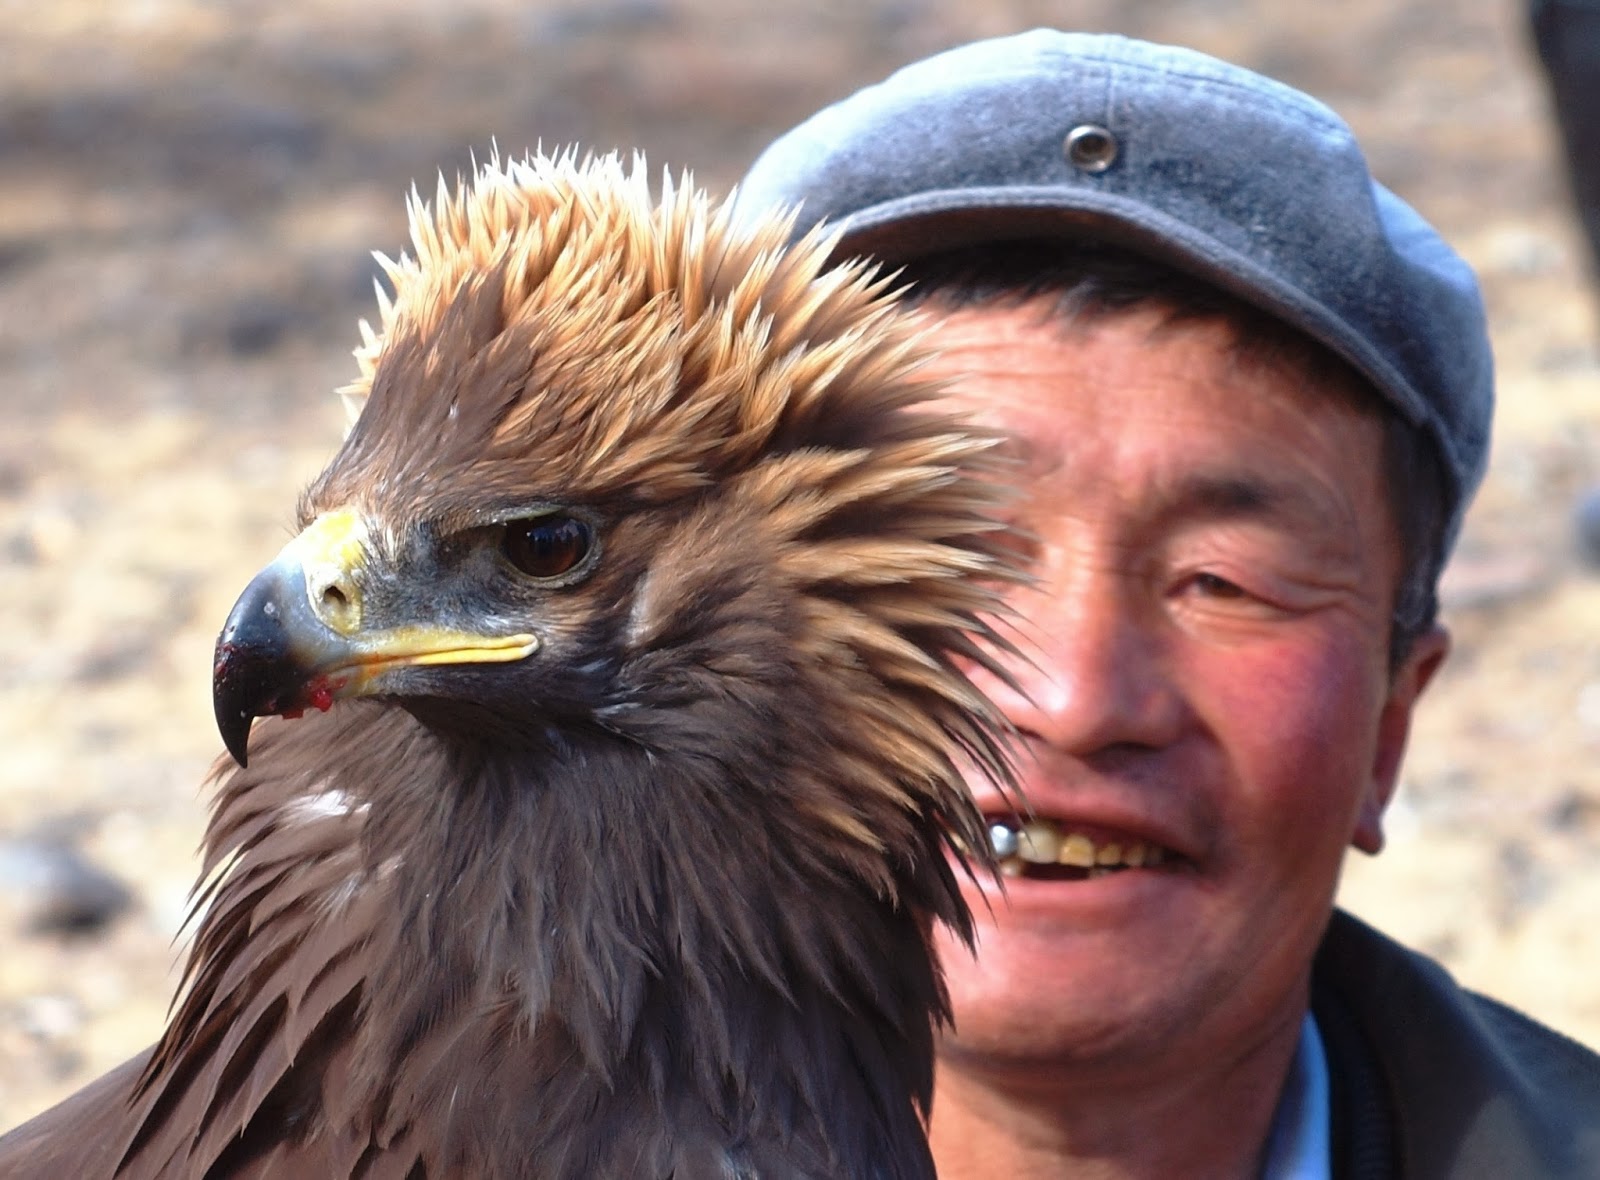 Reasons to visit Mongolia - Kazakh eagle hunter with golden eagle